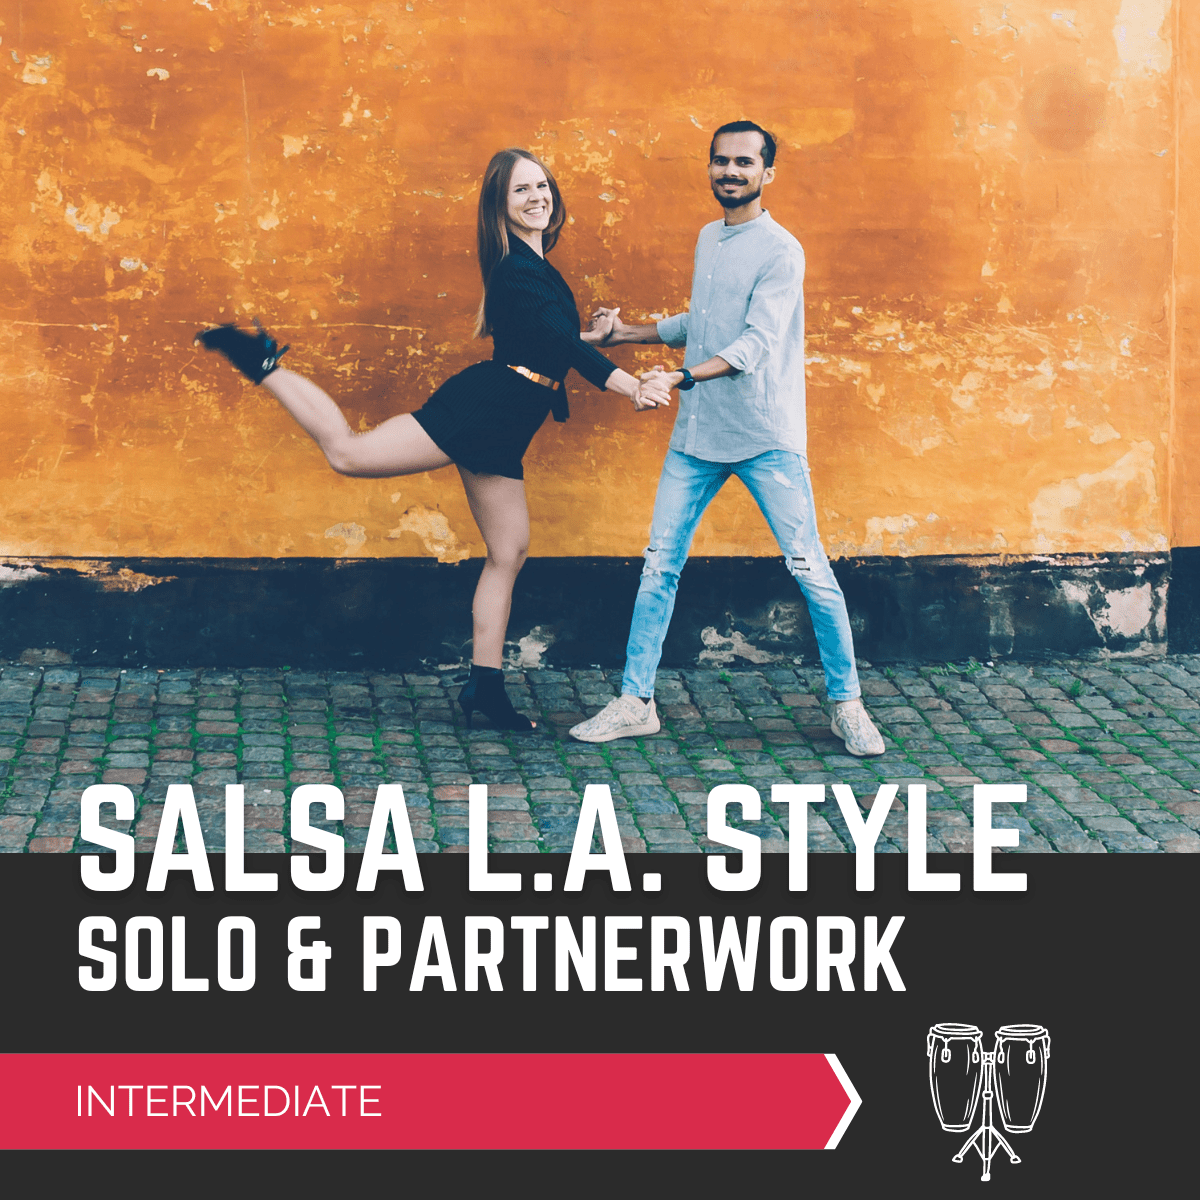 Salsa Romantica, Salsa L.A. Style, Salsa Crossbody, Xbody Salsa, Salsa On 1, Luis Vazquez, Weronika Pilat, Salsa København, Salsa Copenhagen